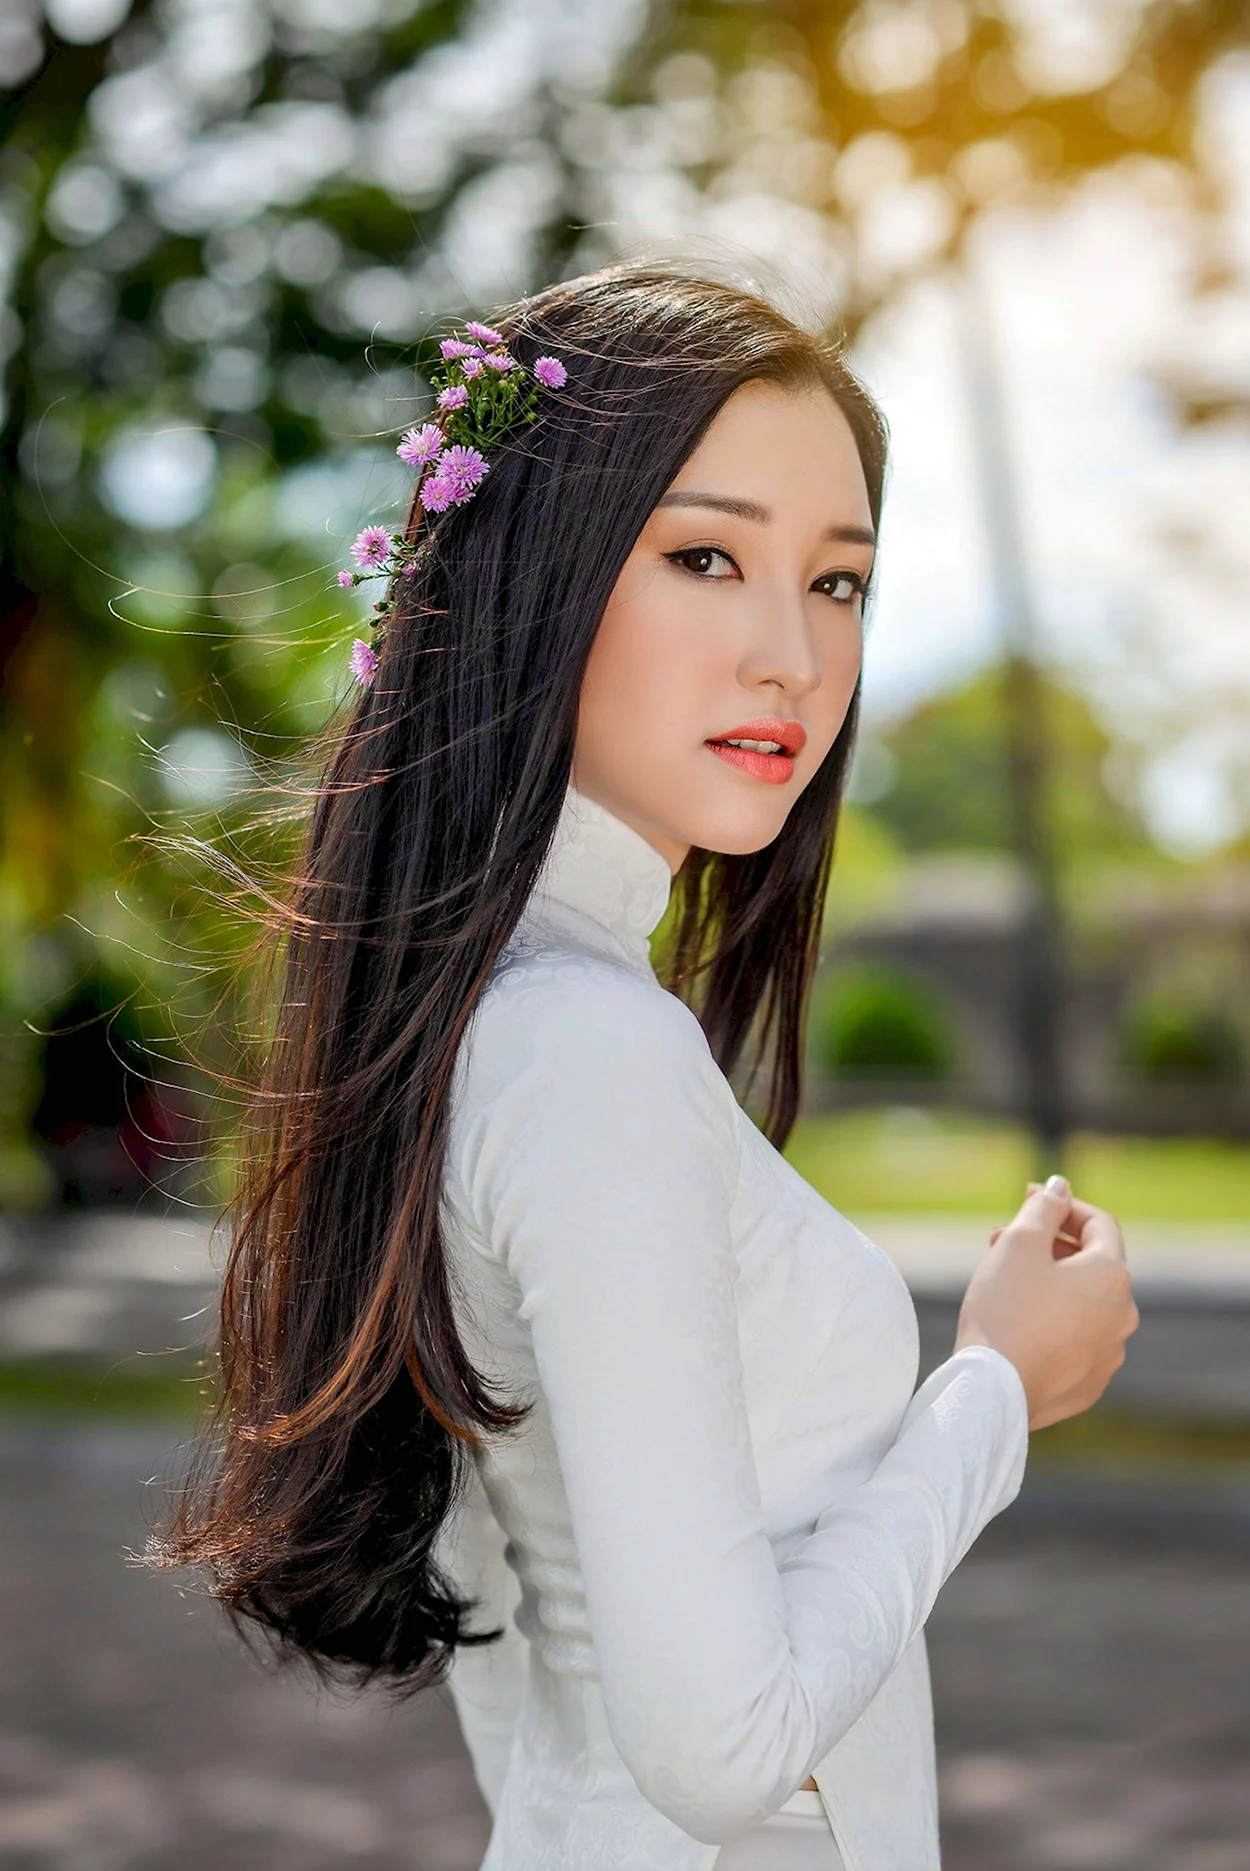 Азиатские девушки. Красивая девушка